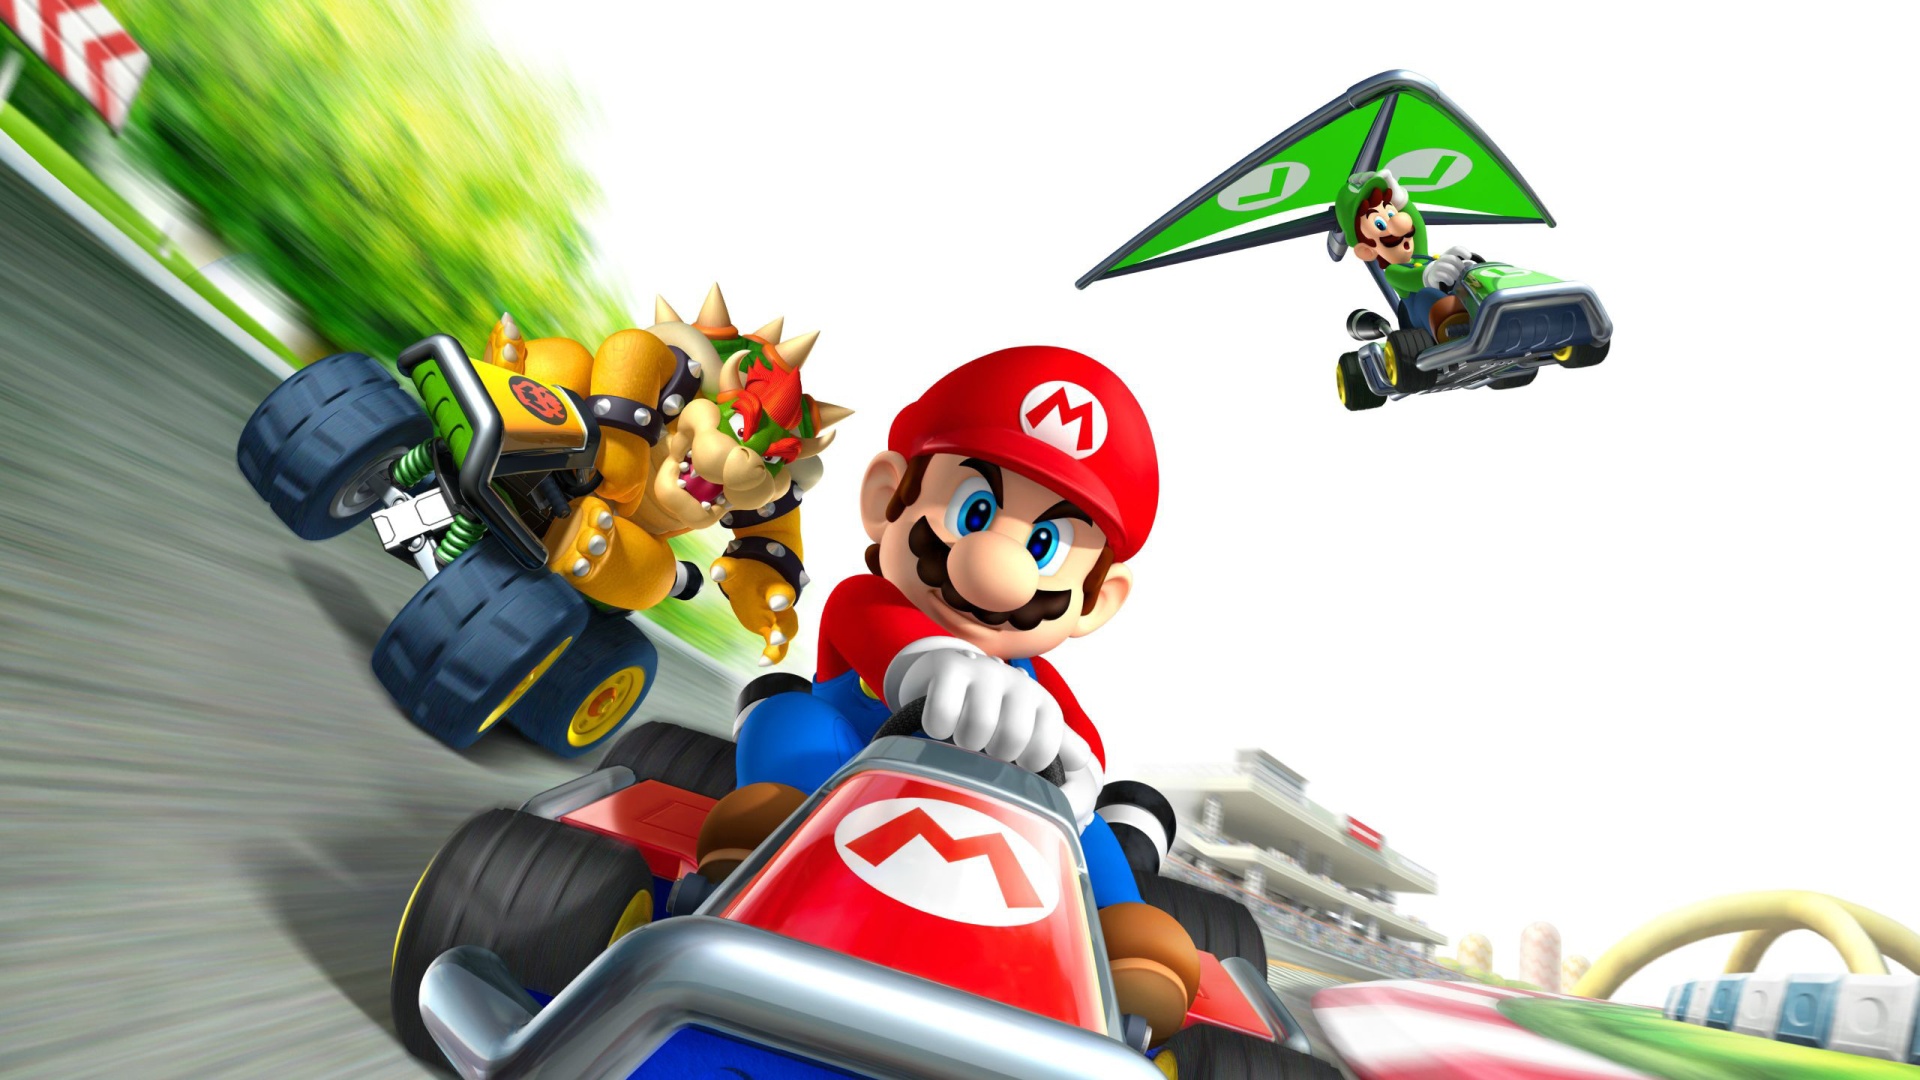 Video Game Mario Kart 7 HD Wallpaper | Background Image